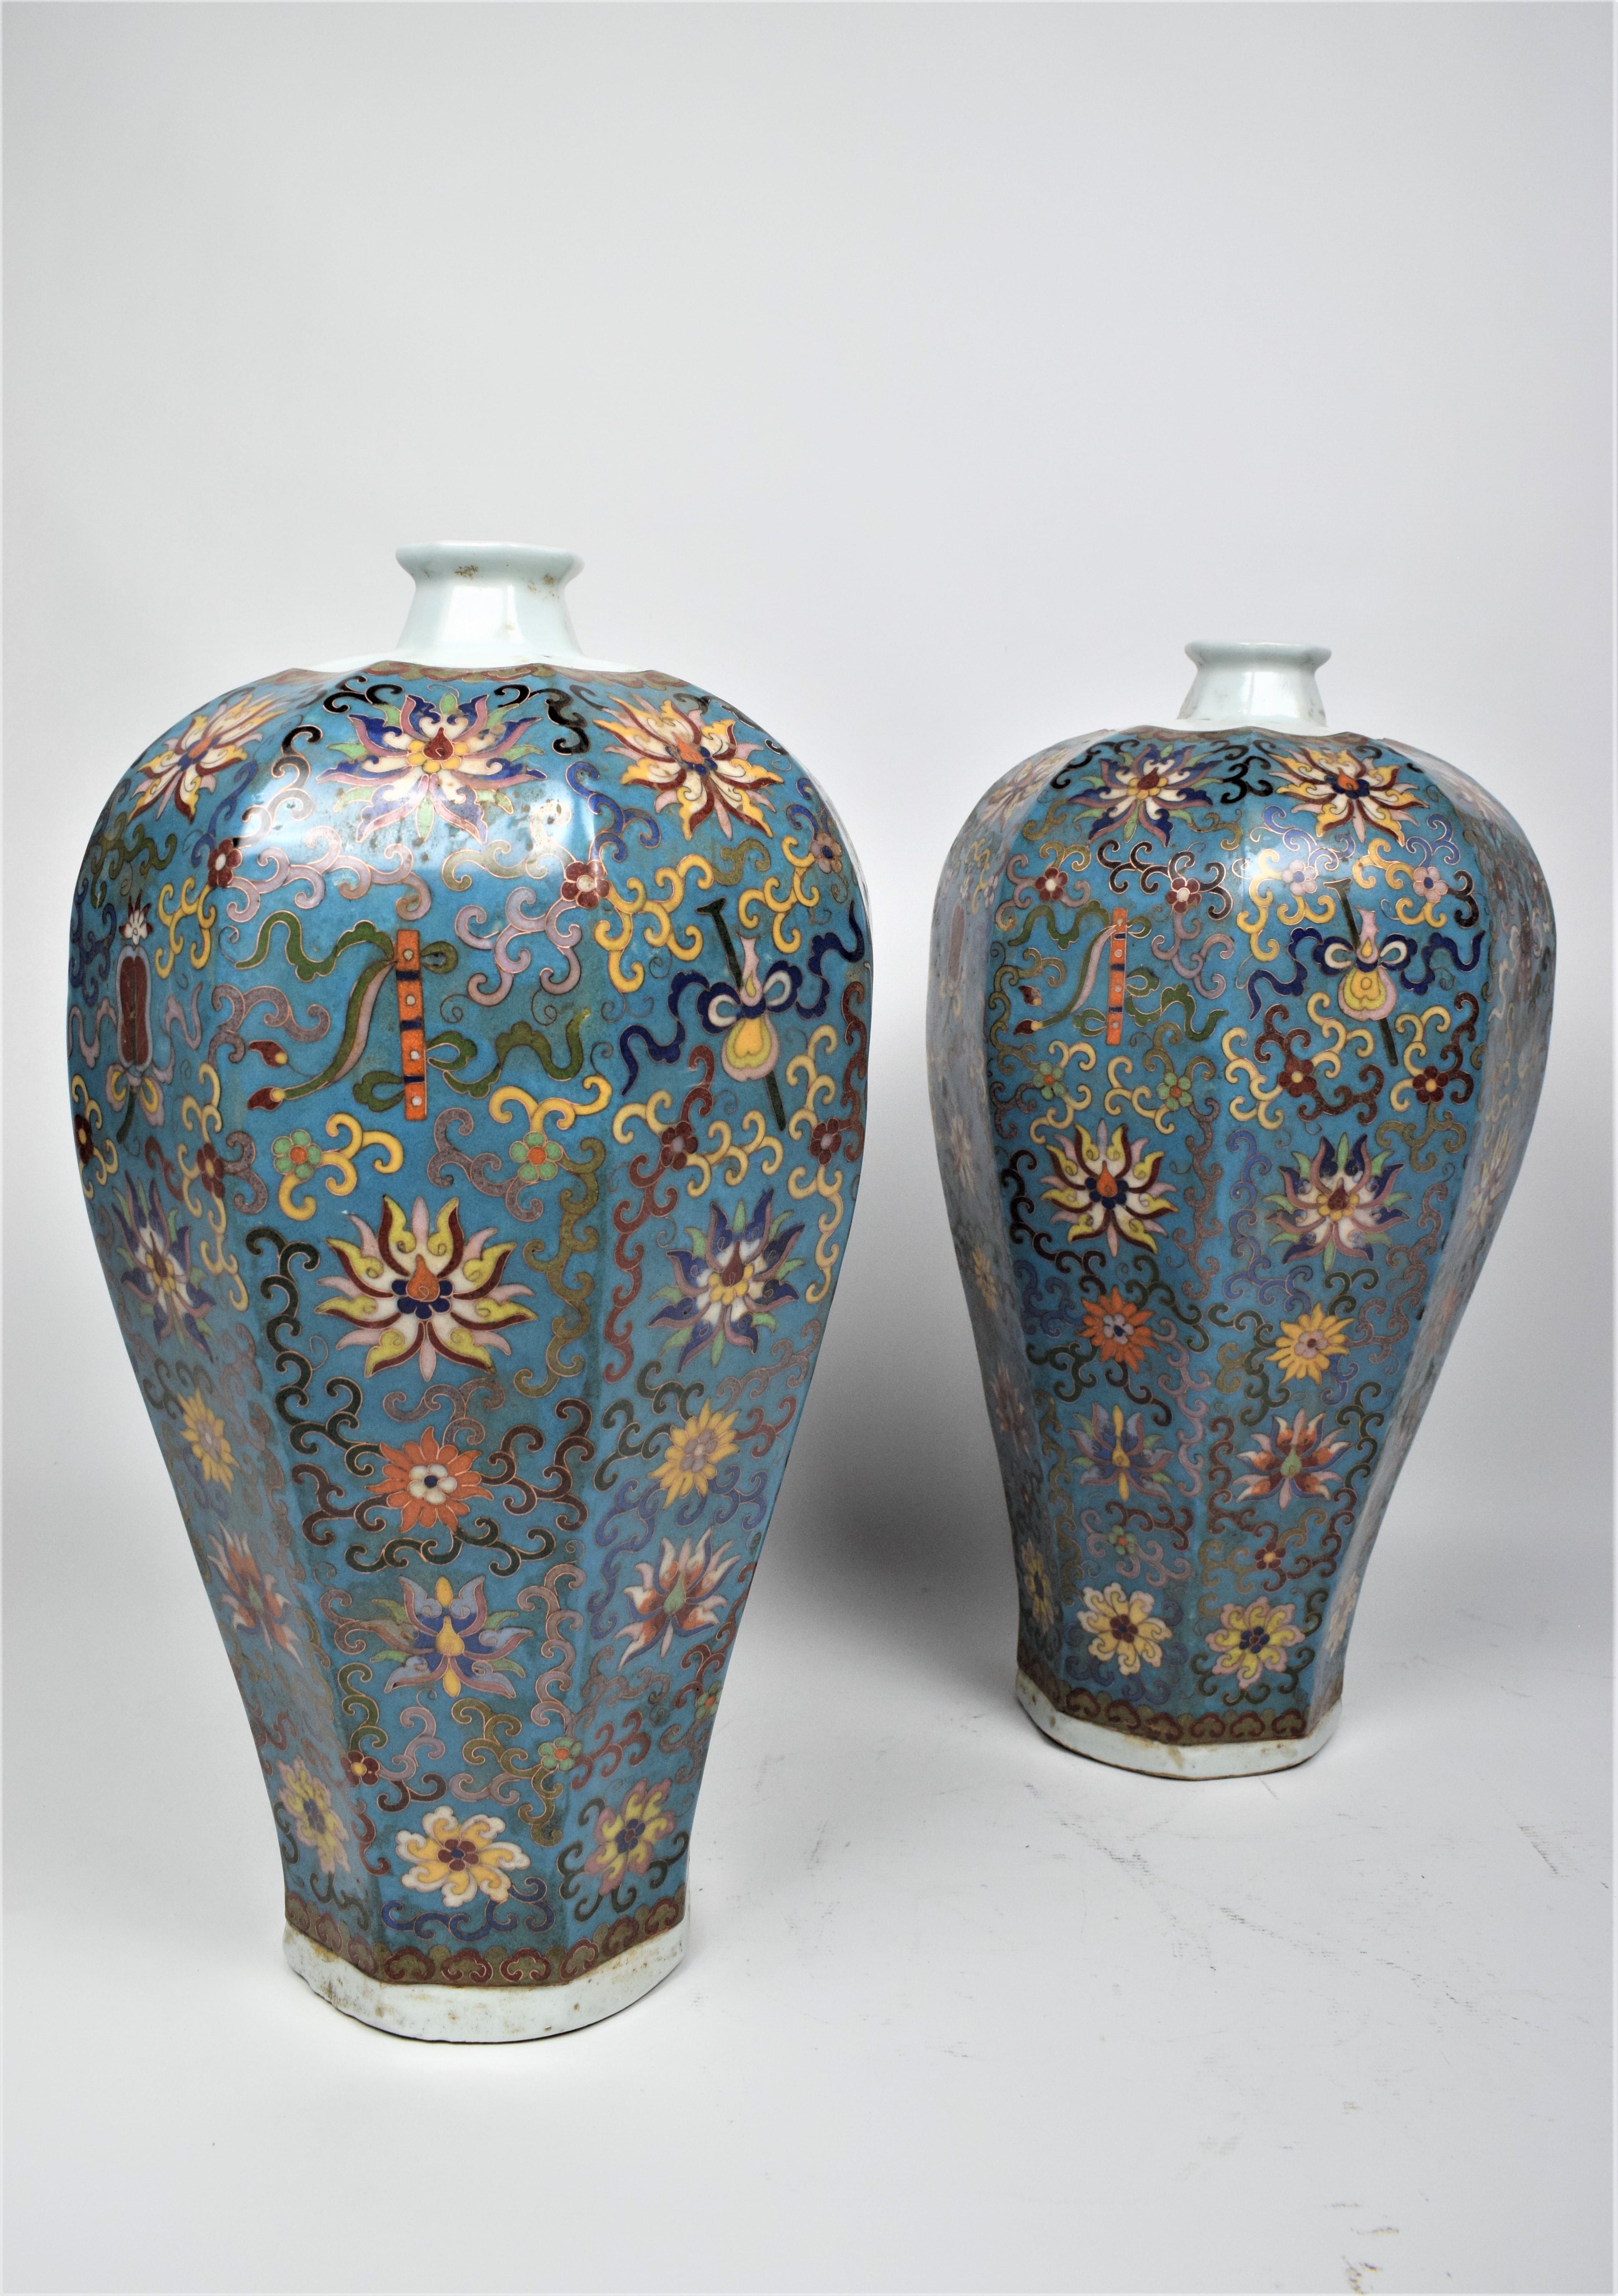 Enameled Chinese Large Cloisonné Enamel Bottle Vases Late Qing Dynasty, 19th Century For Sale